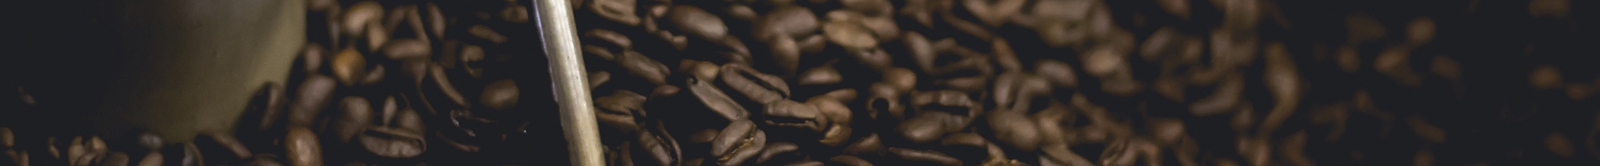 Espresso Royale Coffee Beans